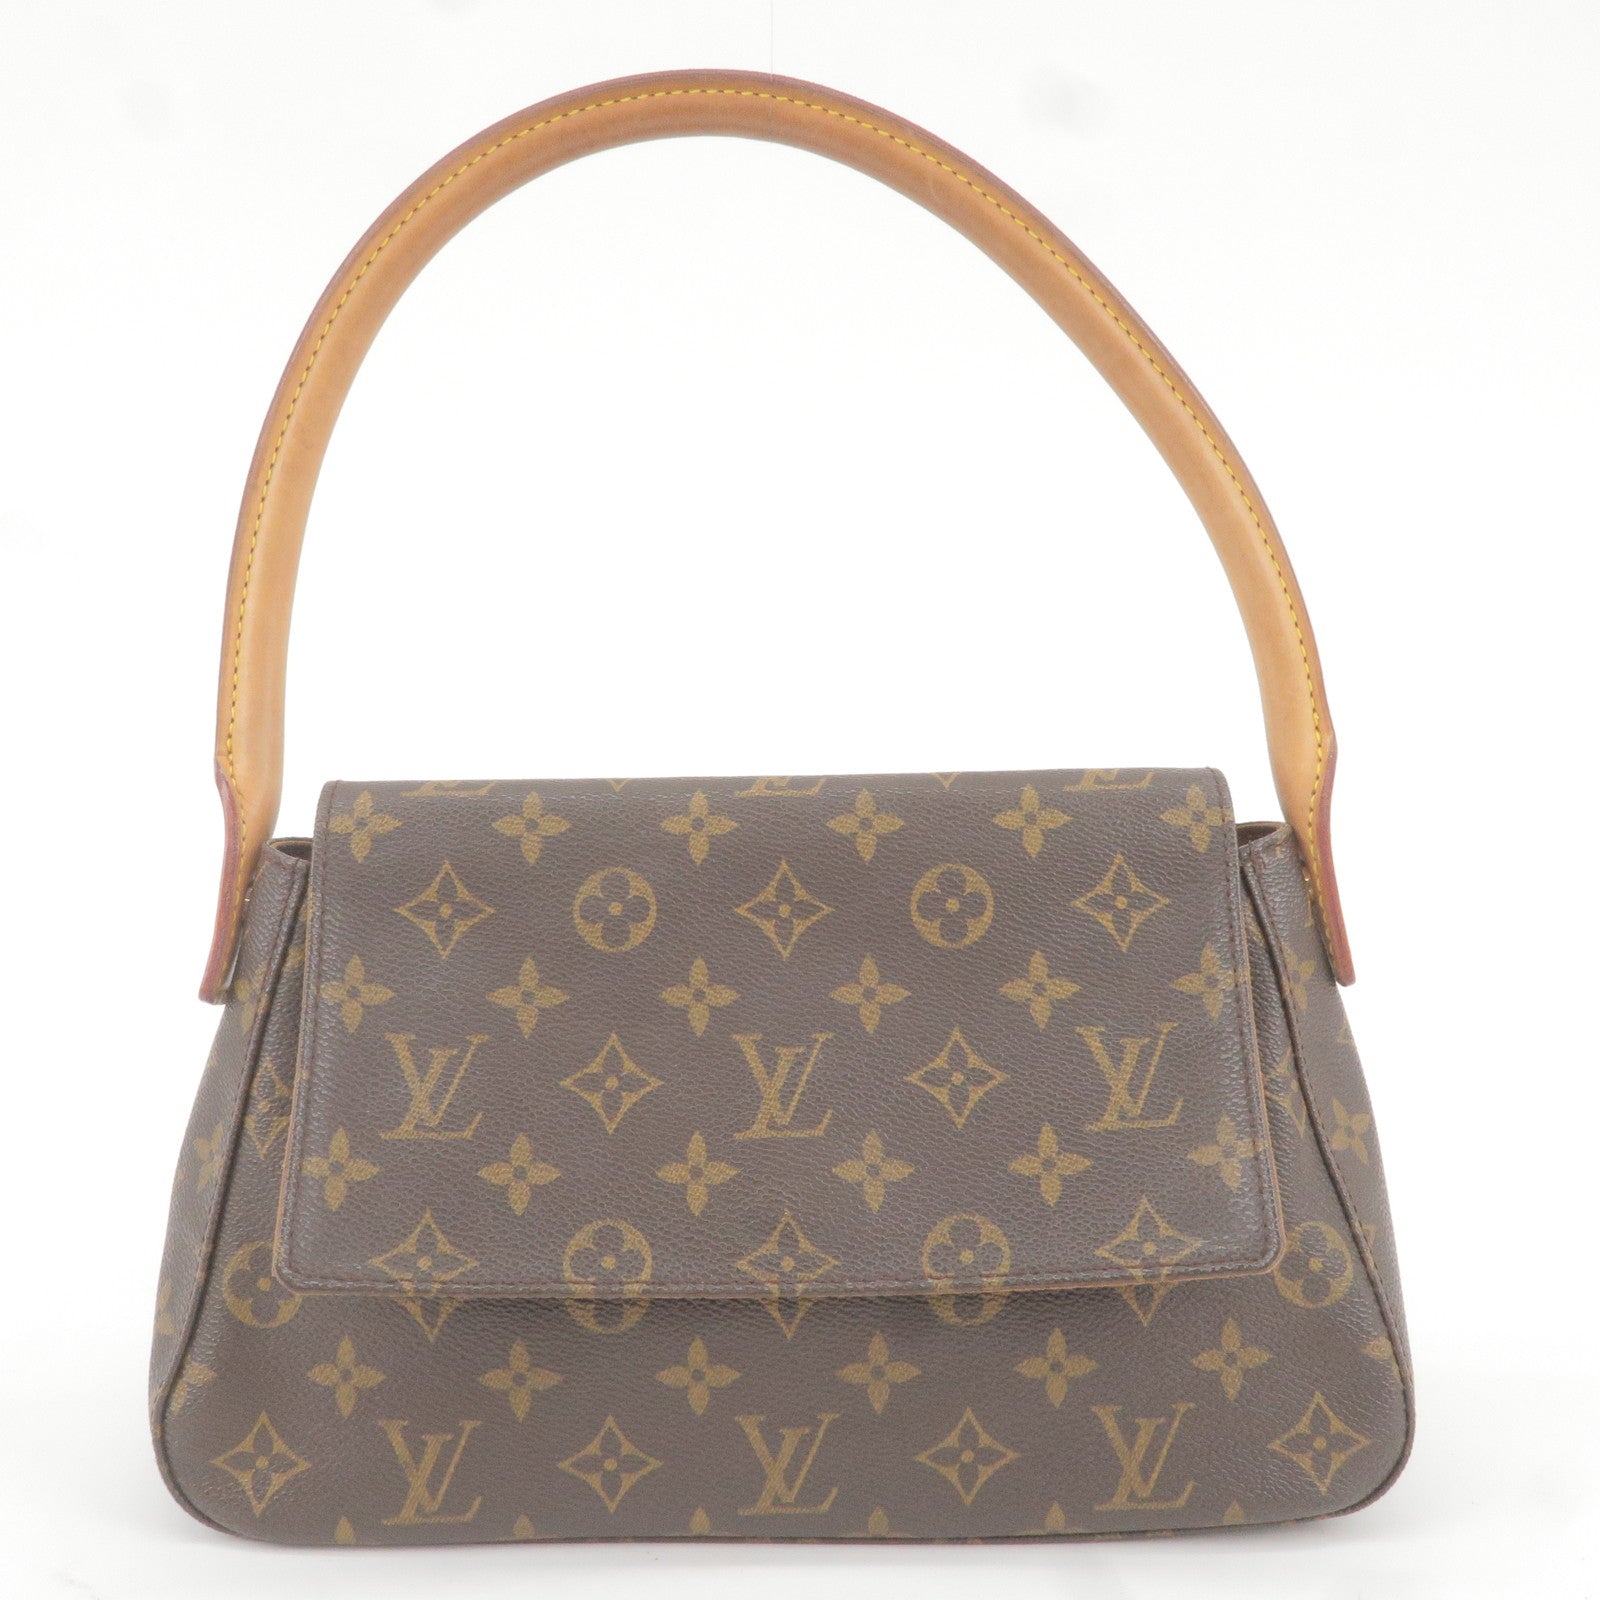 Vintage Bags UK - Louis Vuitton Trotteur Bag Very similar to the